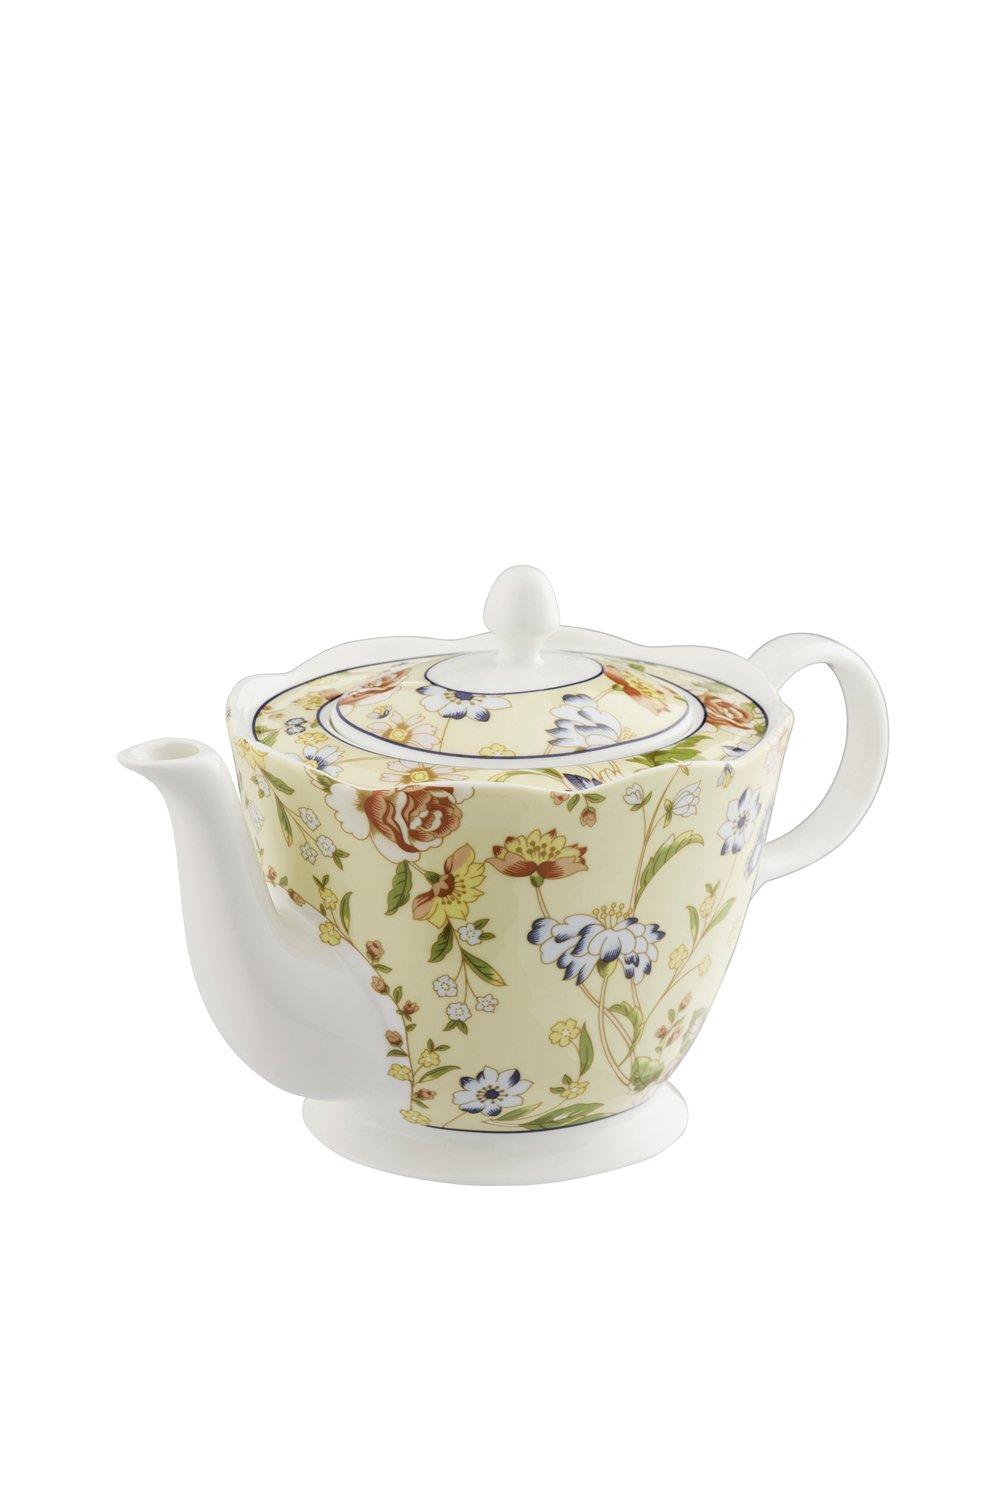 'Cottage Garden' Teapot